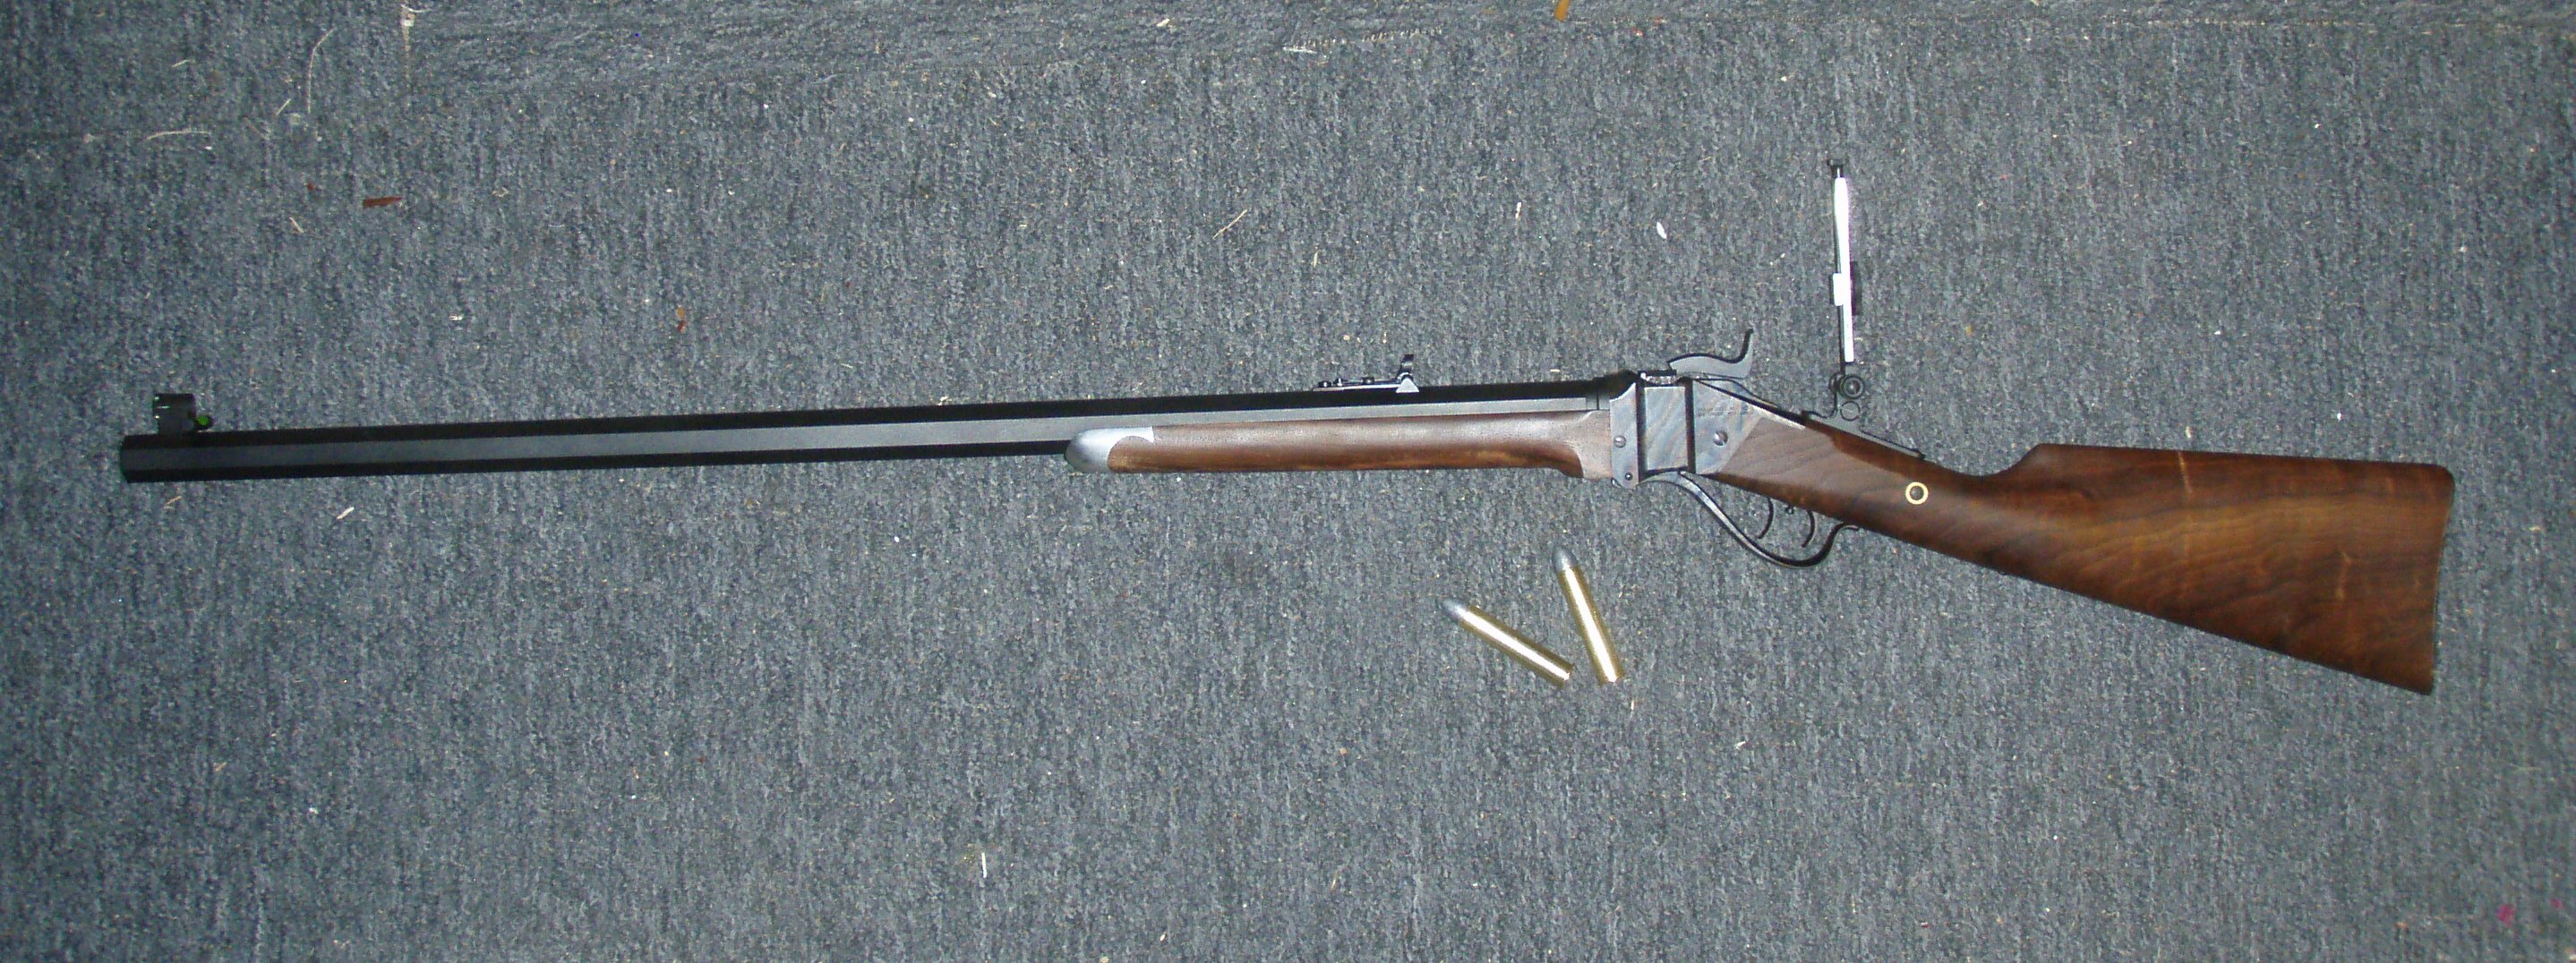 Sharps 1863 Rifle #27